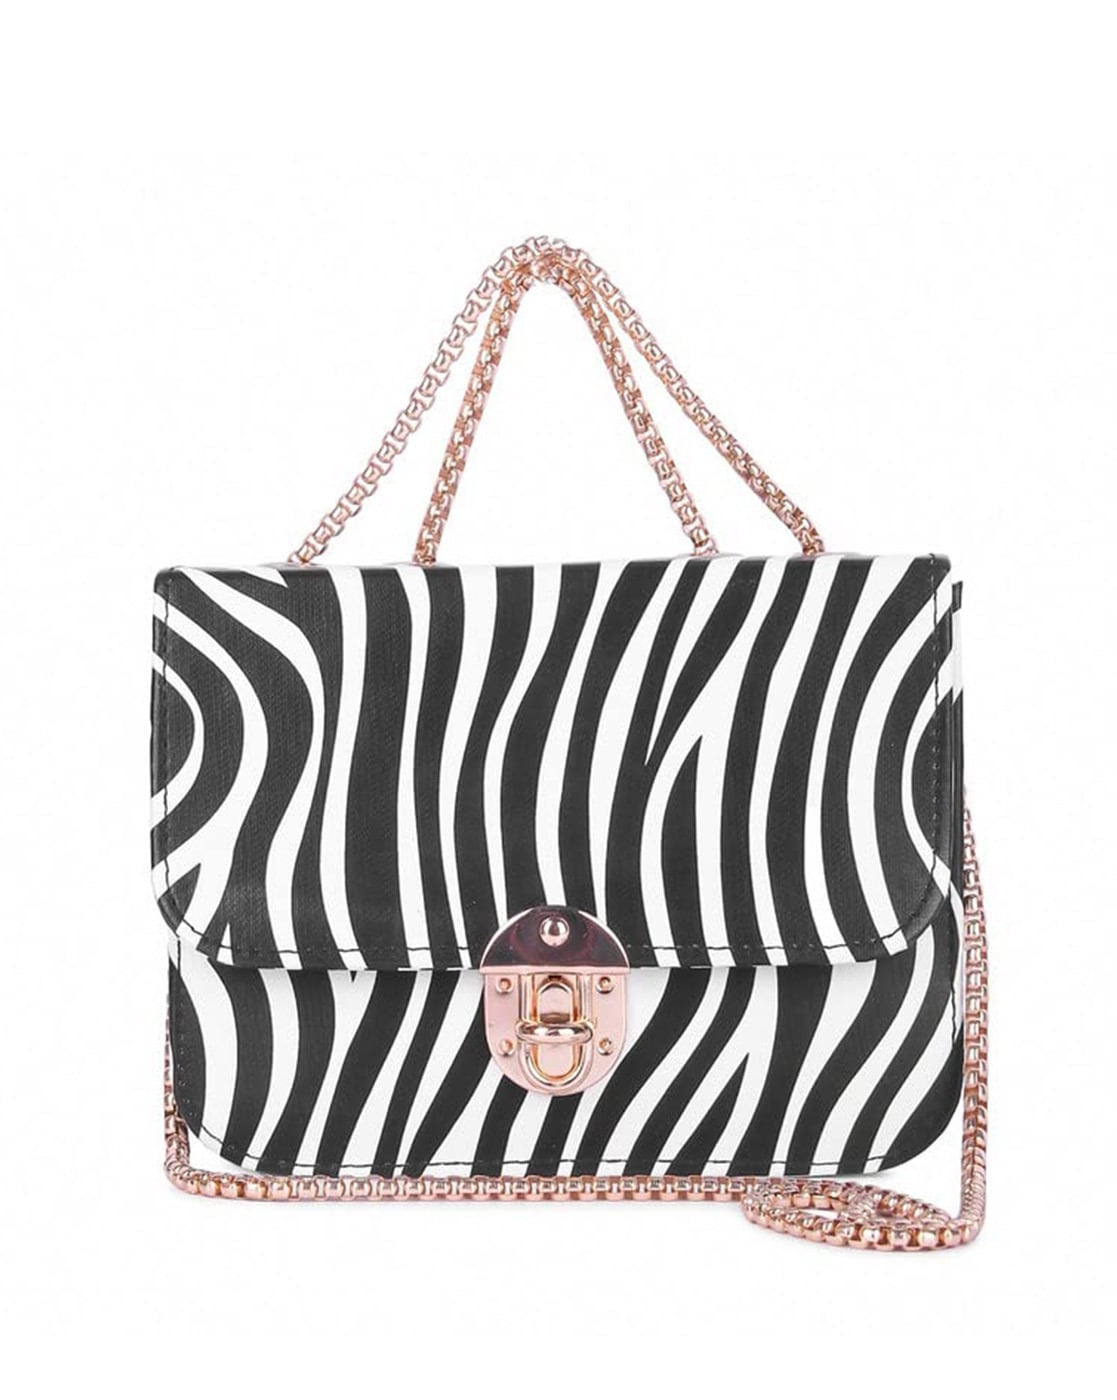 ALAZA Pink Zebra Print Animal Shoulder Bag Purse for Women Tote Handbag  with Zipper Closure : Clothing, Shoes & Jewelry - Amazon.com